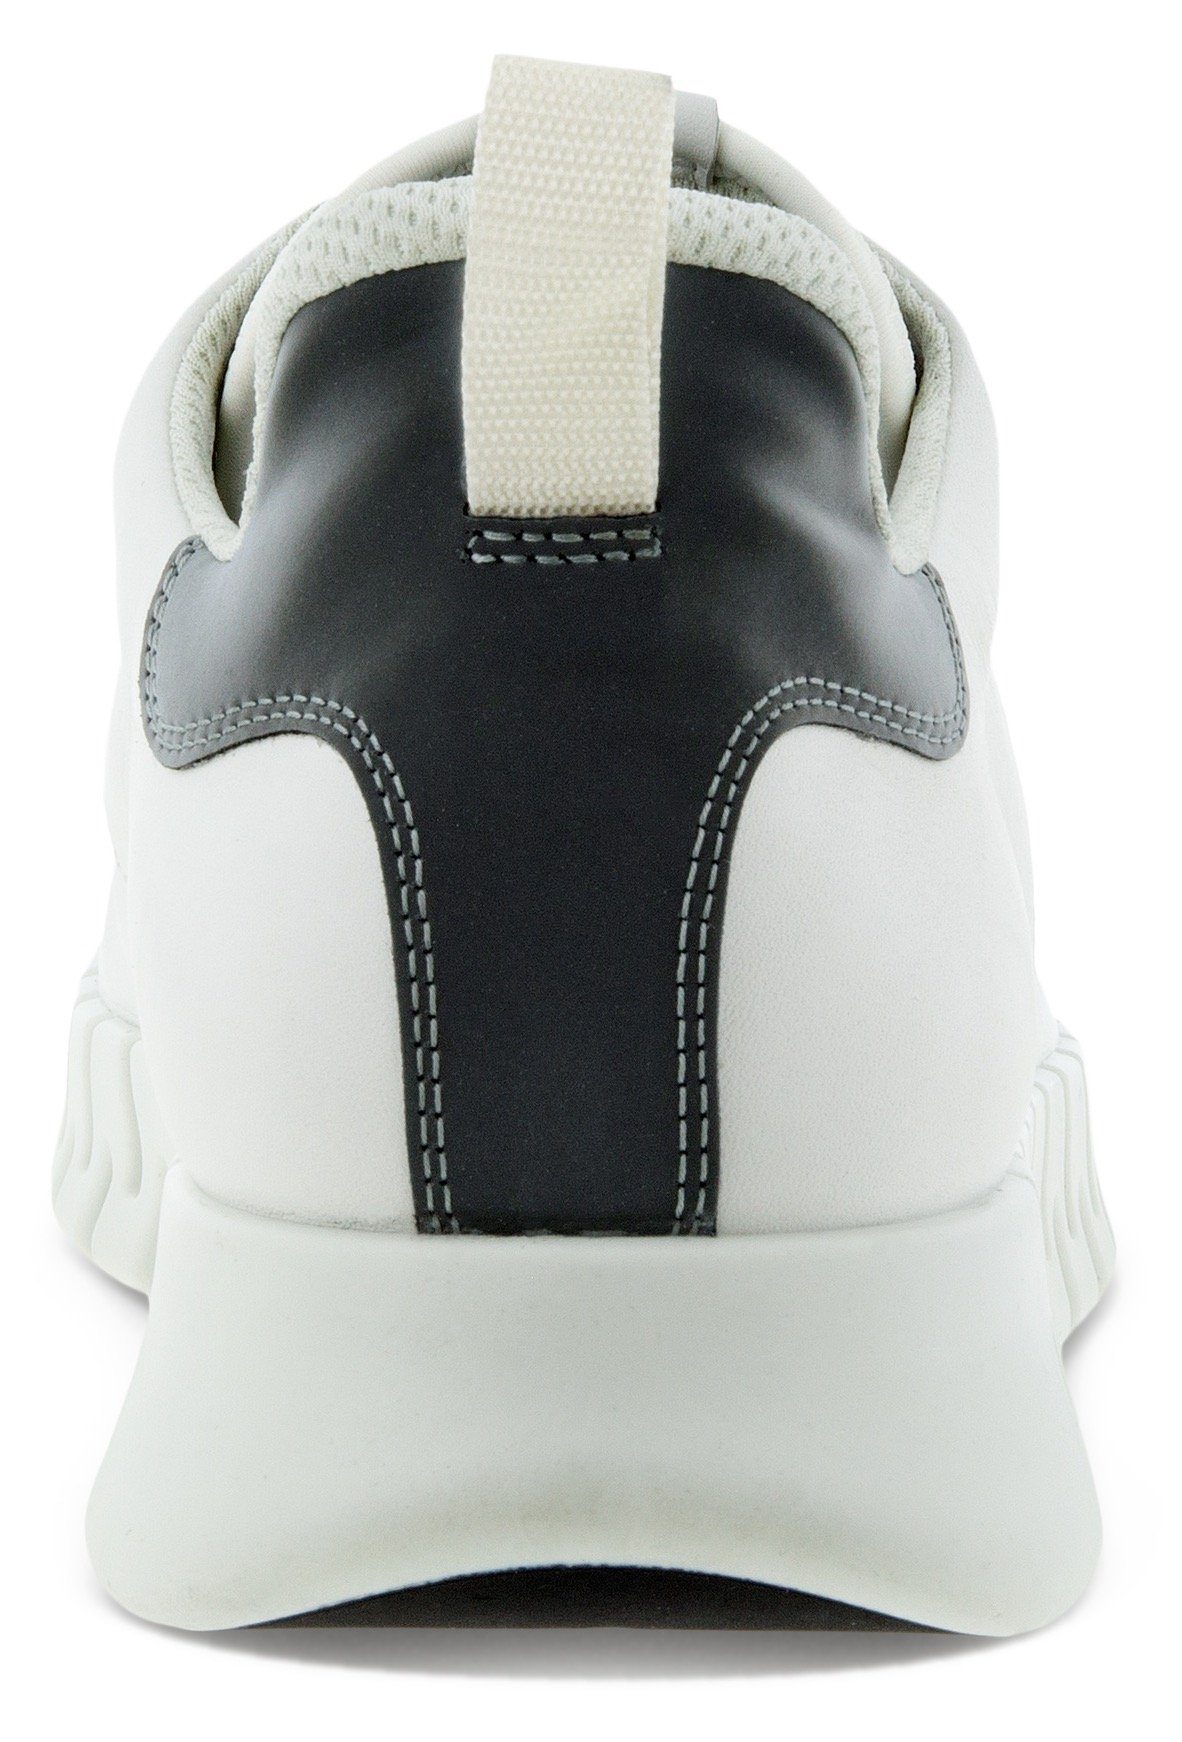 Ecco GRUUV M dual fit-Innensohle Sneaker weiß herausnehmbarer mit